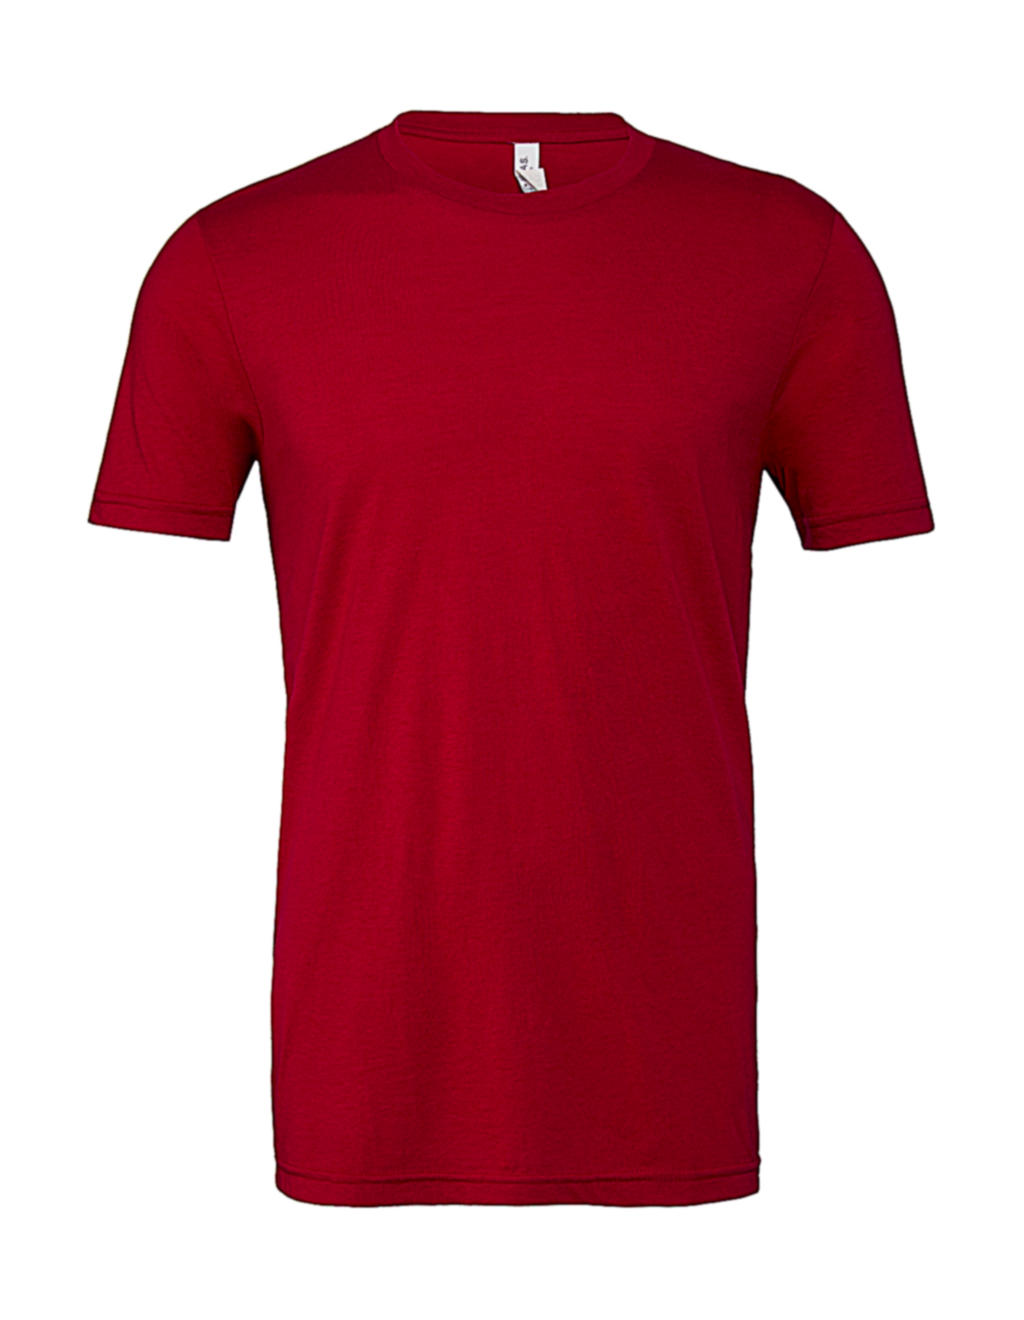 Unisex tričko Triblend - solid red triblend